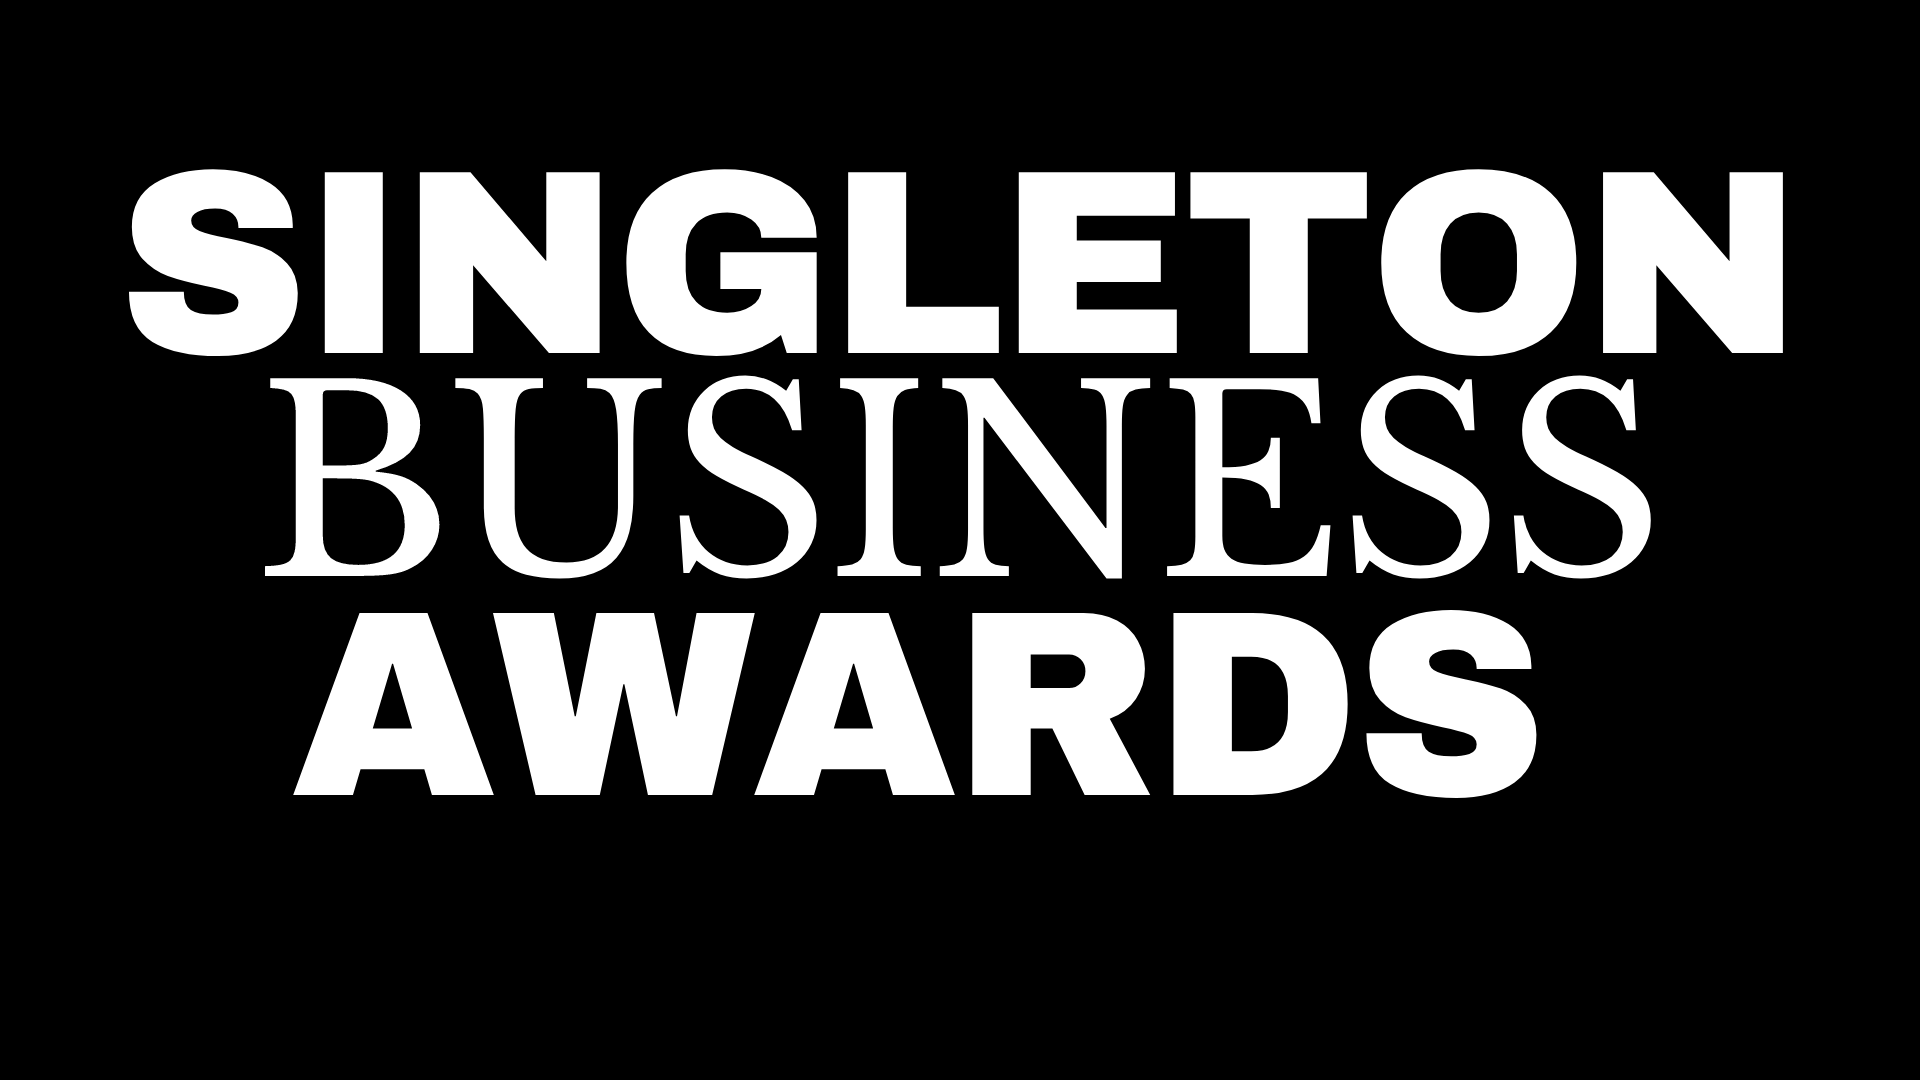 Singleton Business Awards Logo